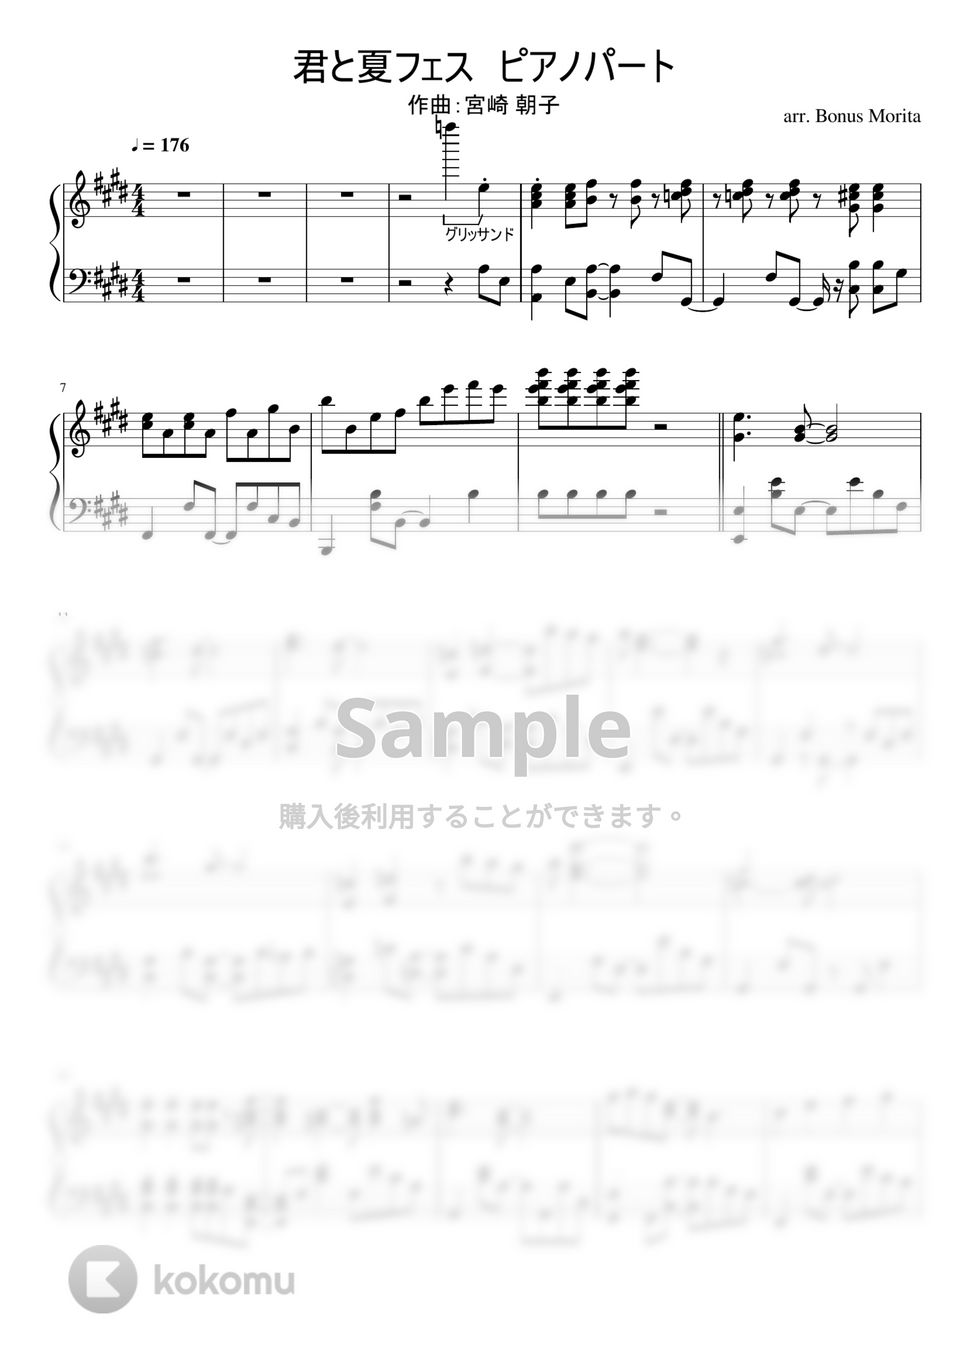 SHISHAMO - 君と夏フェス (バンド用ピアノパート) by ボーナス森田